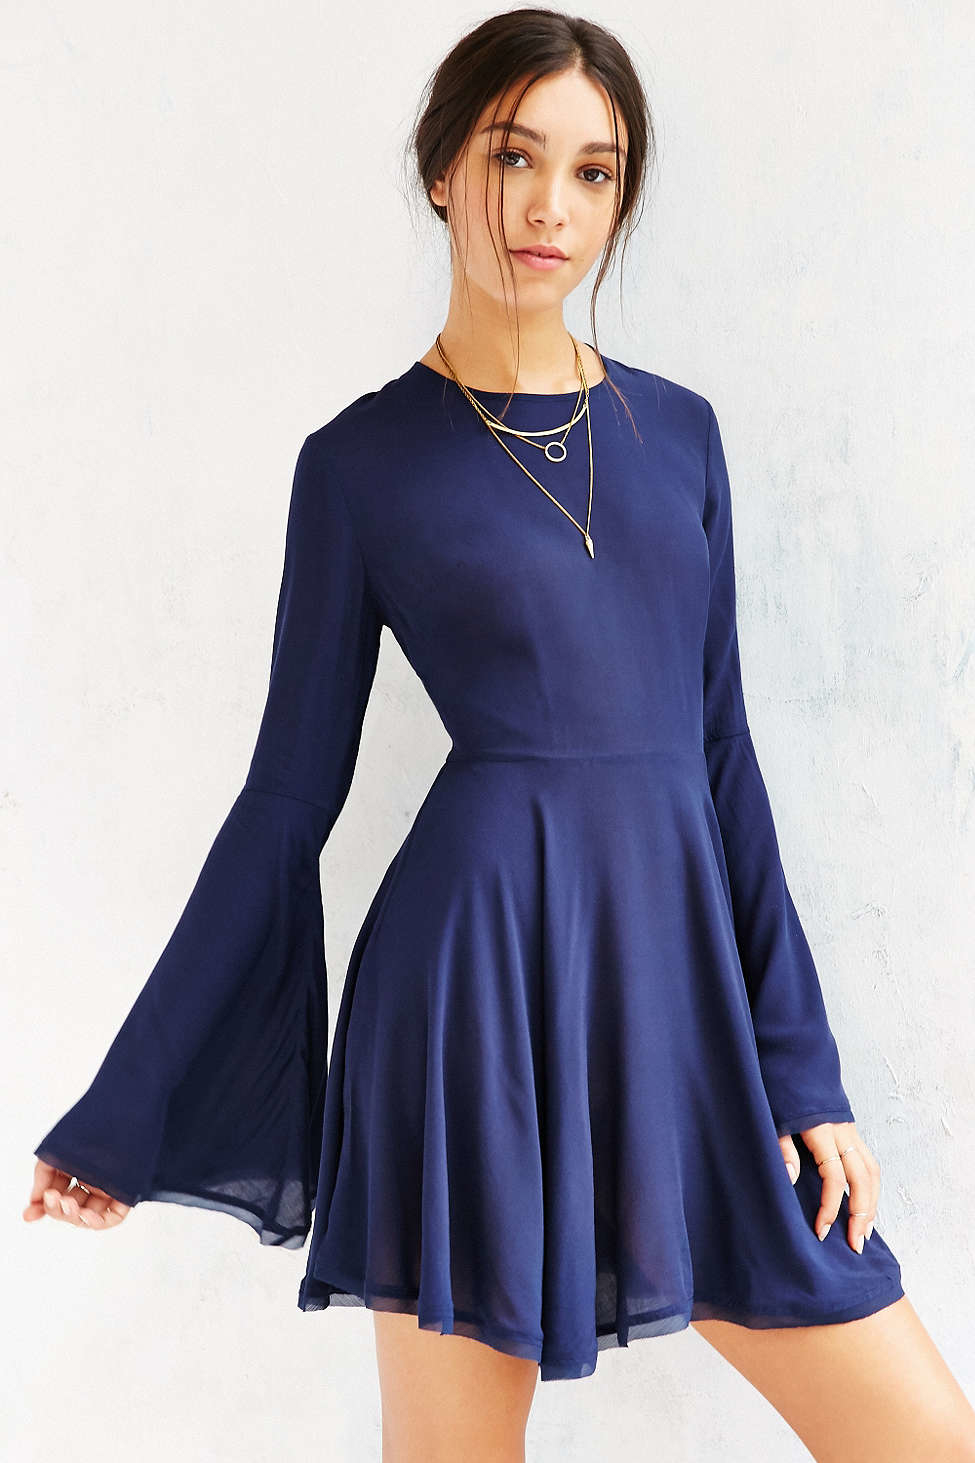 Ecote Sascha Bell Sleeve Dress in Blue